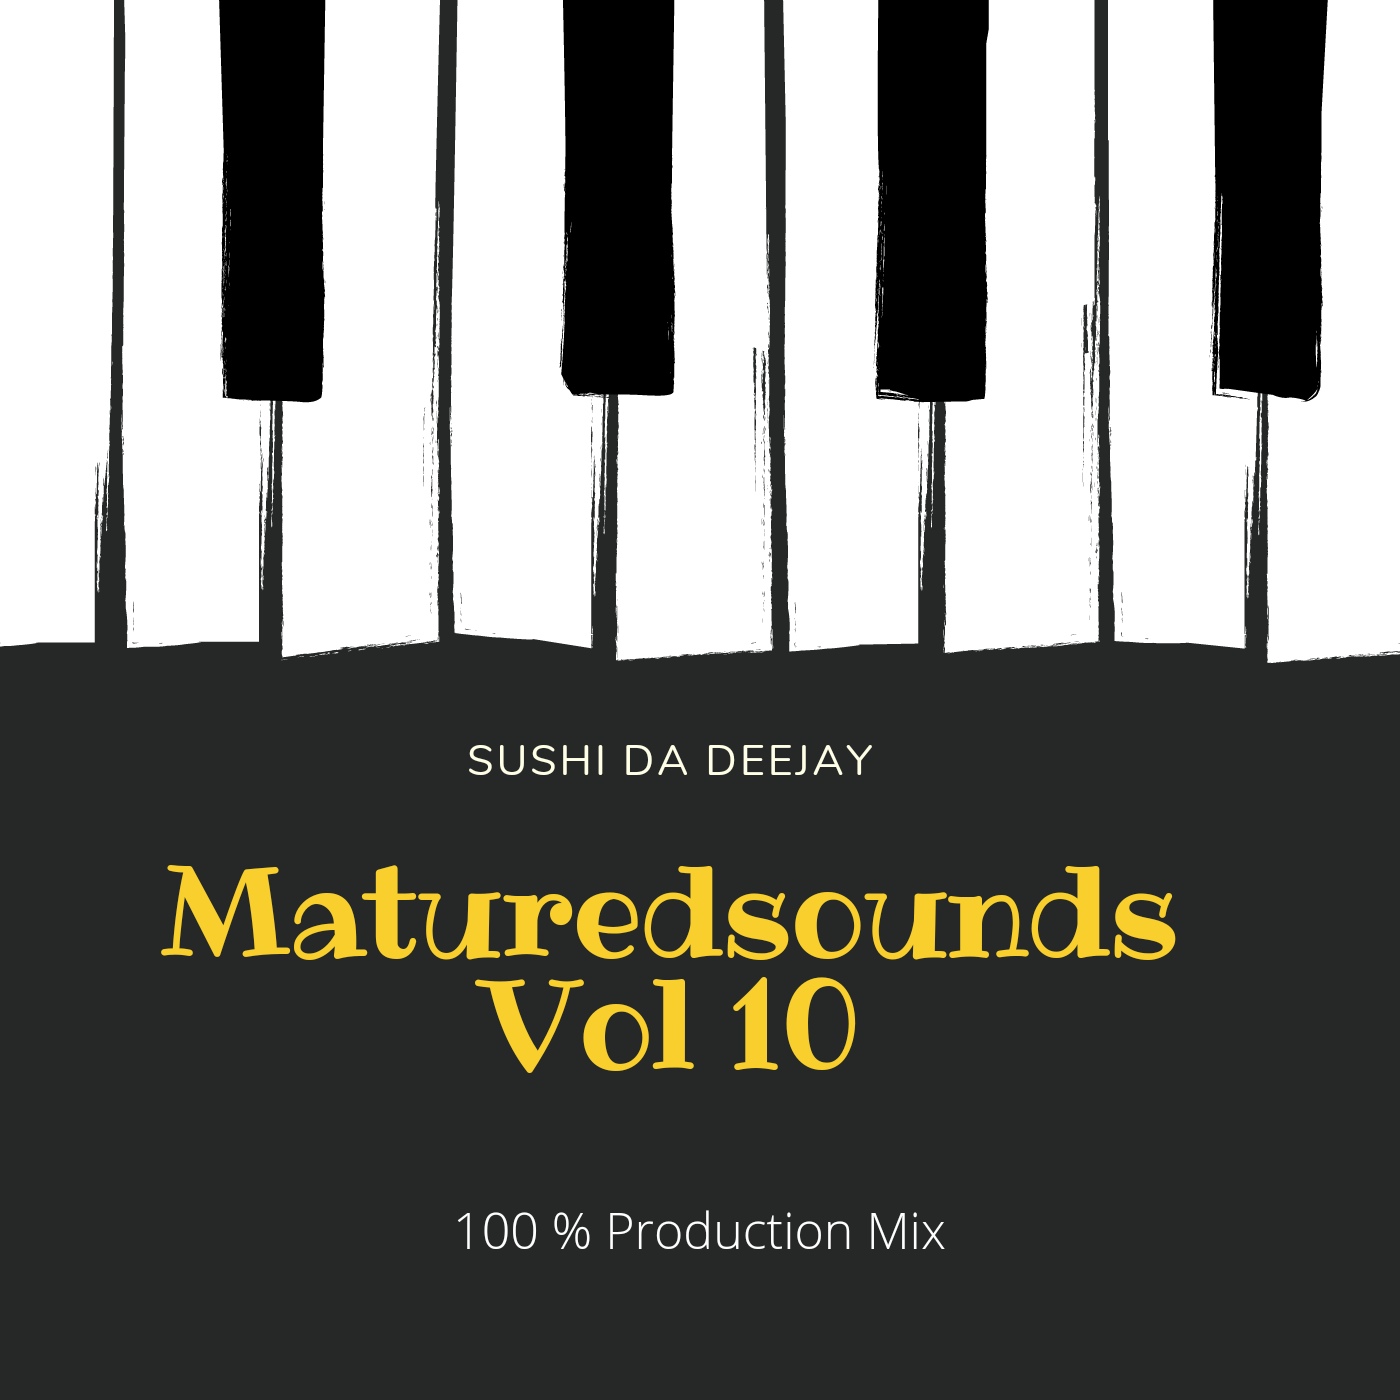 Sushi Da Deejay – Matured Sounds Vol 10 (100 Production Mix)